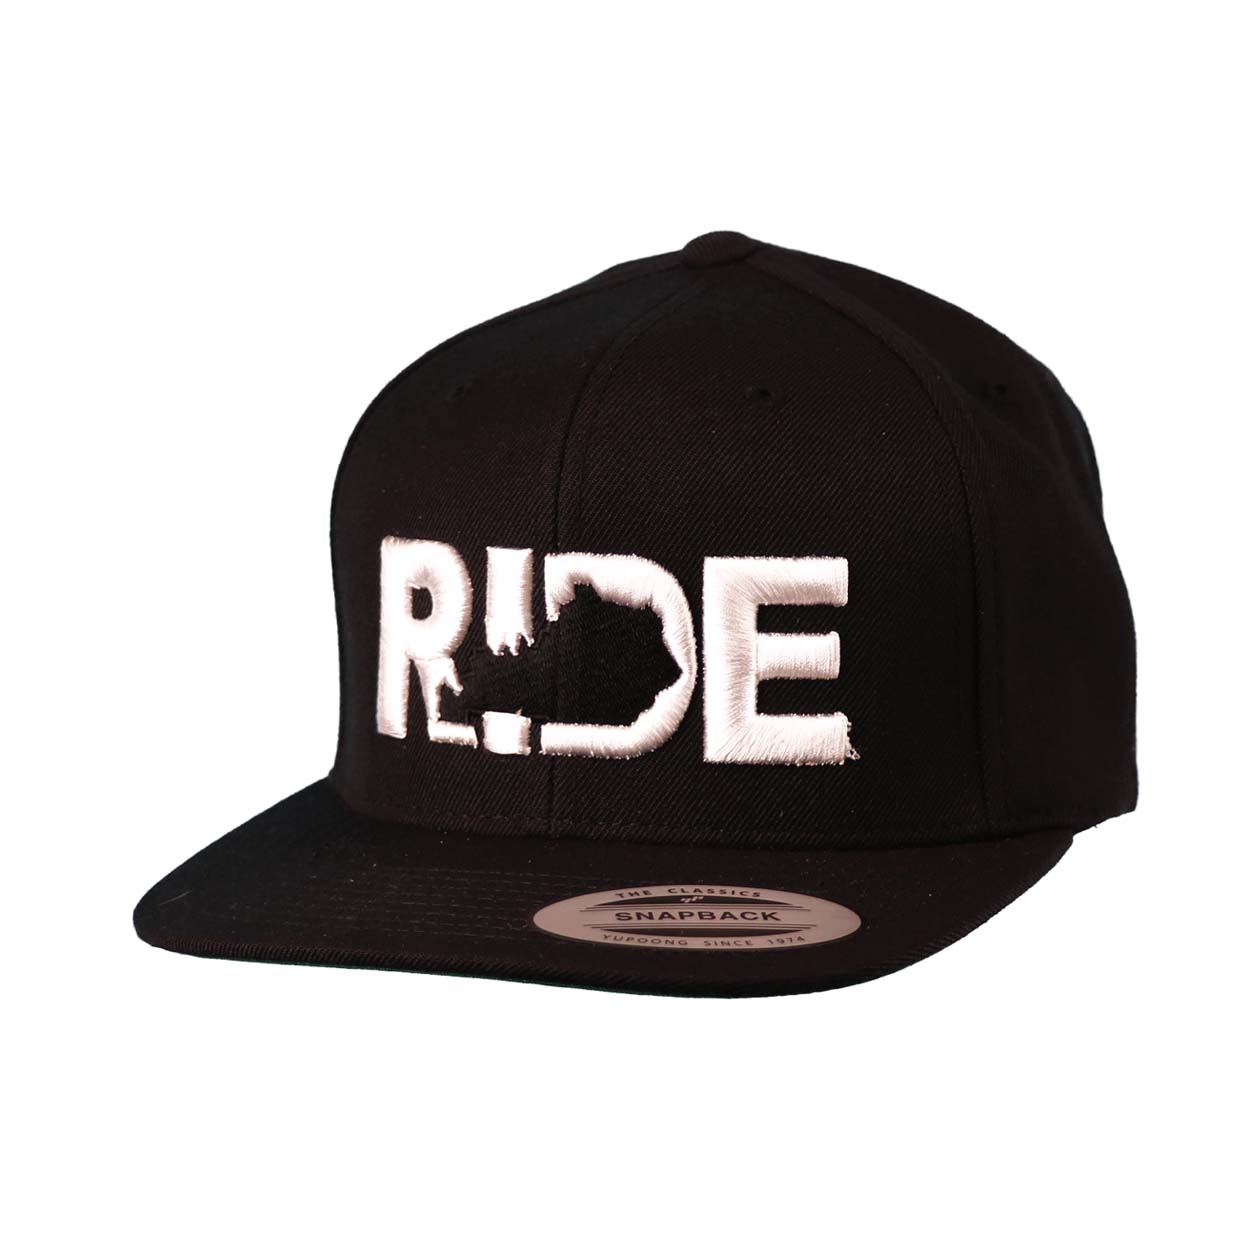 Ride Kentucky Classic Pro 3D Puff Embroidered Snapback Flat Brim Hat Black